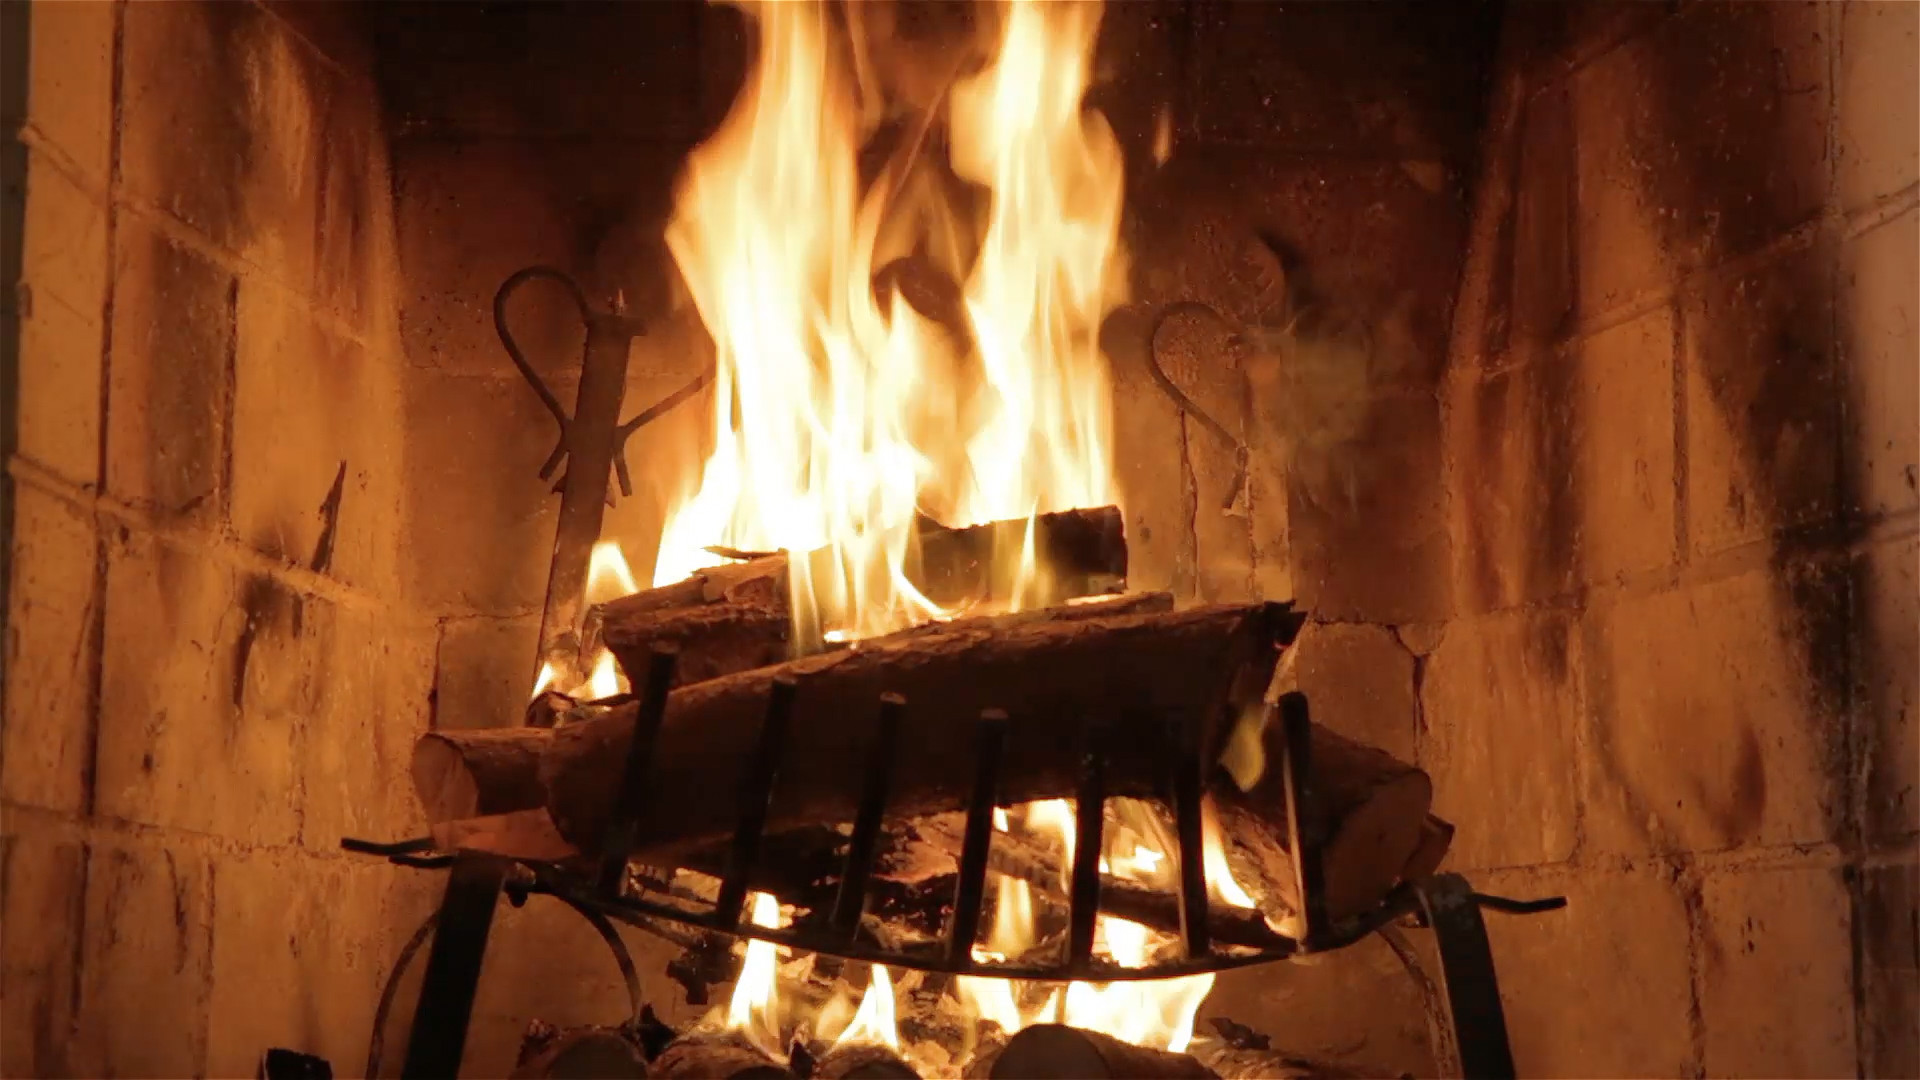 1920x1080 ... Wonder Fireplace - Video Wallpaper of Relaxing Scenes screenshot 4 ...